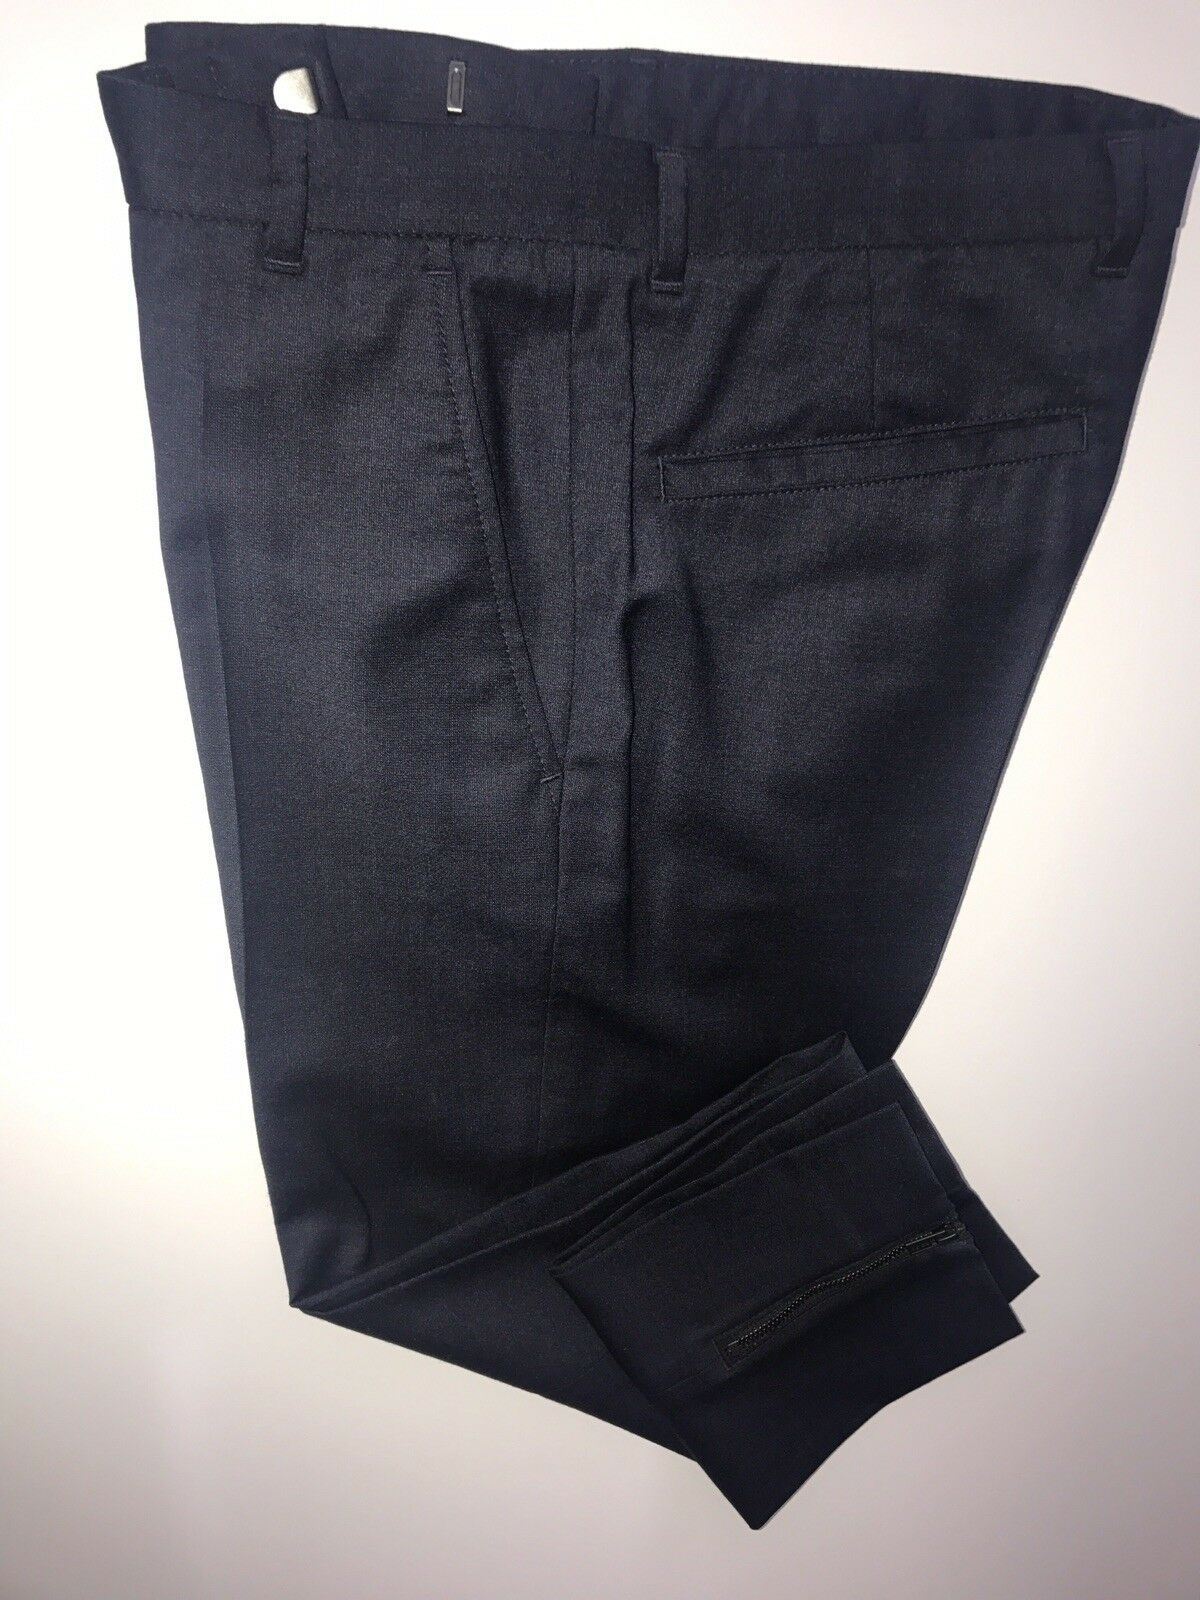 NWT $175 Boss Hugo Boss Hiw Mens Wool  Dark Blue Dress Pants Size 32R US